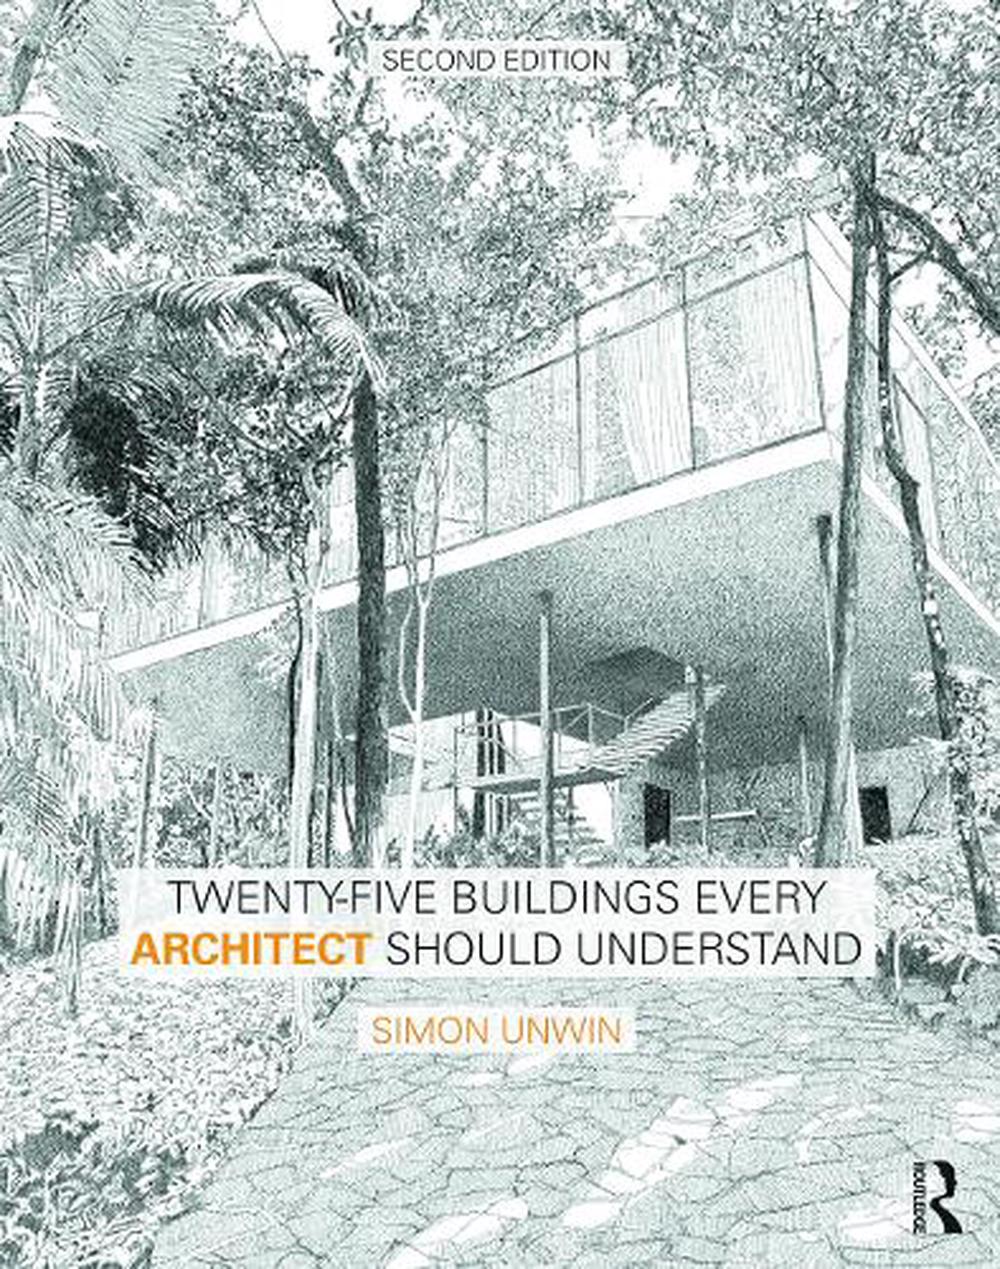 Twenty Buildings Every Architect Should Understand by Simon Unwin